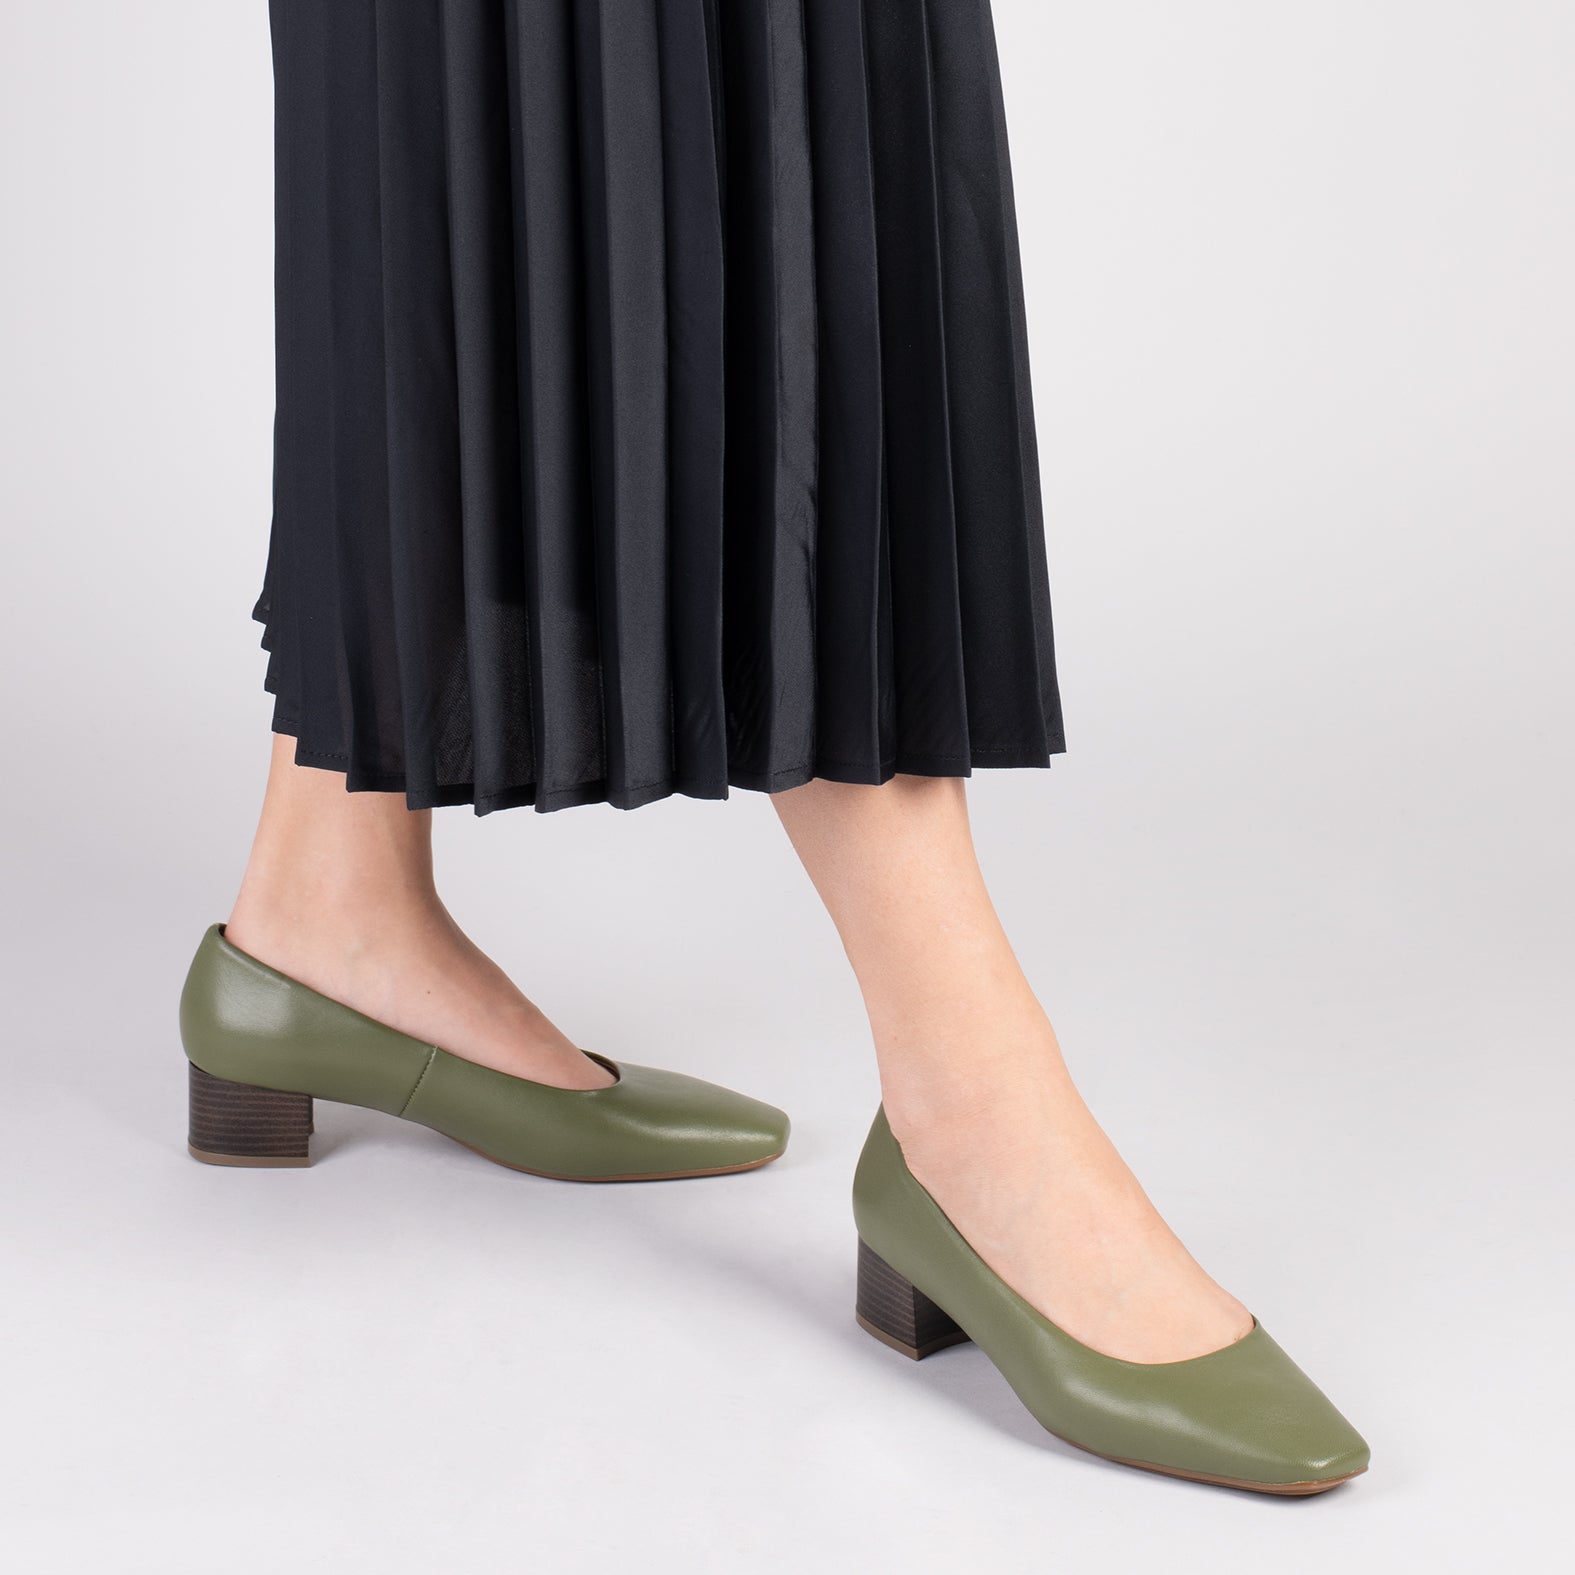 URBAN LADY – KHAKI nappa leather low heels